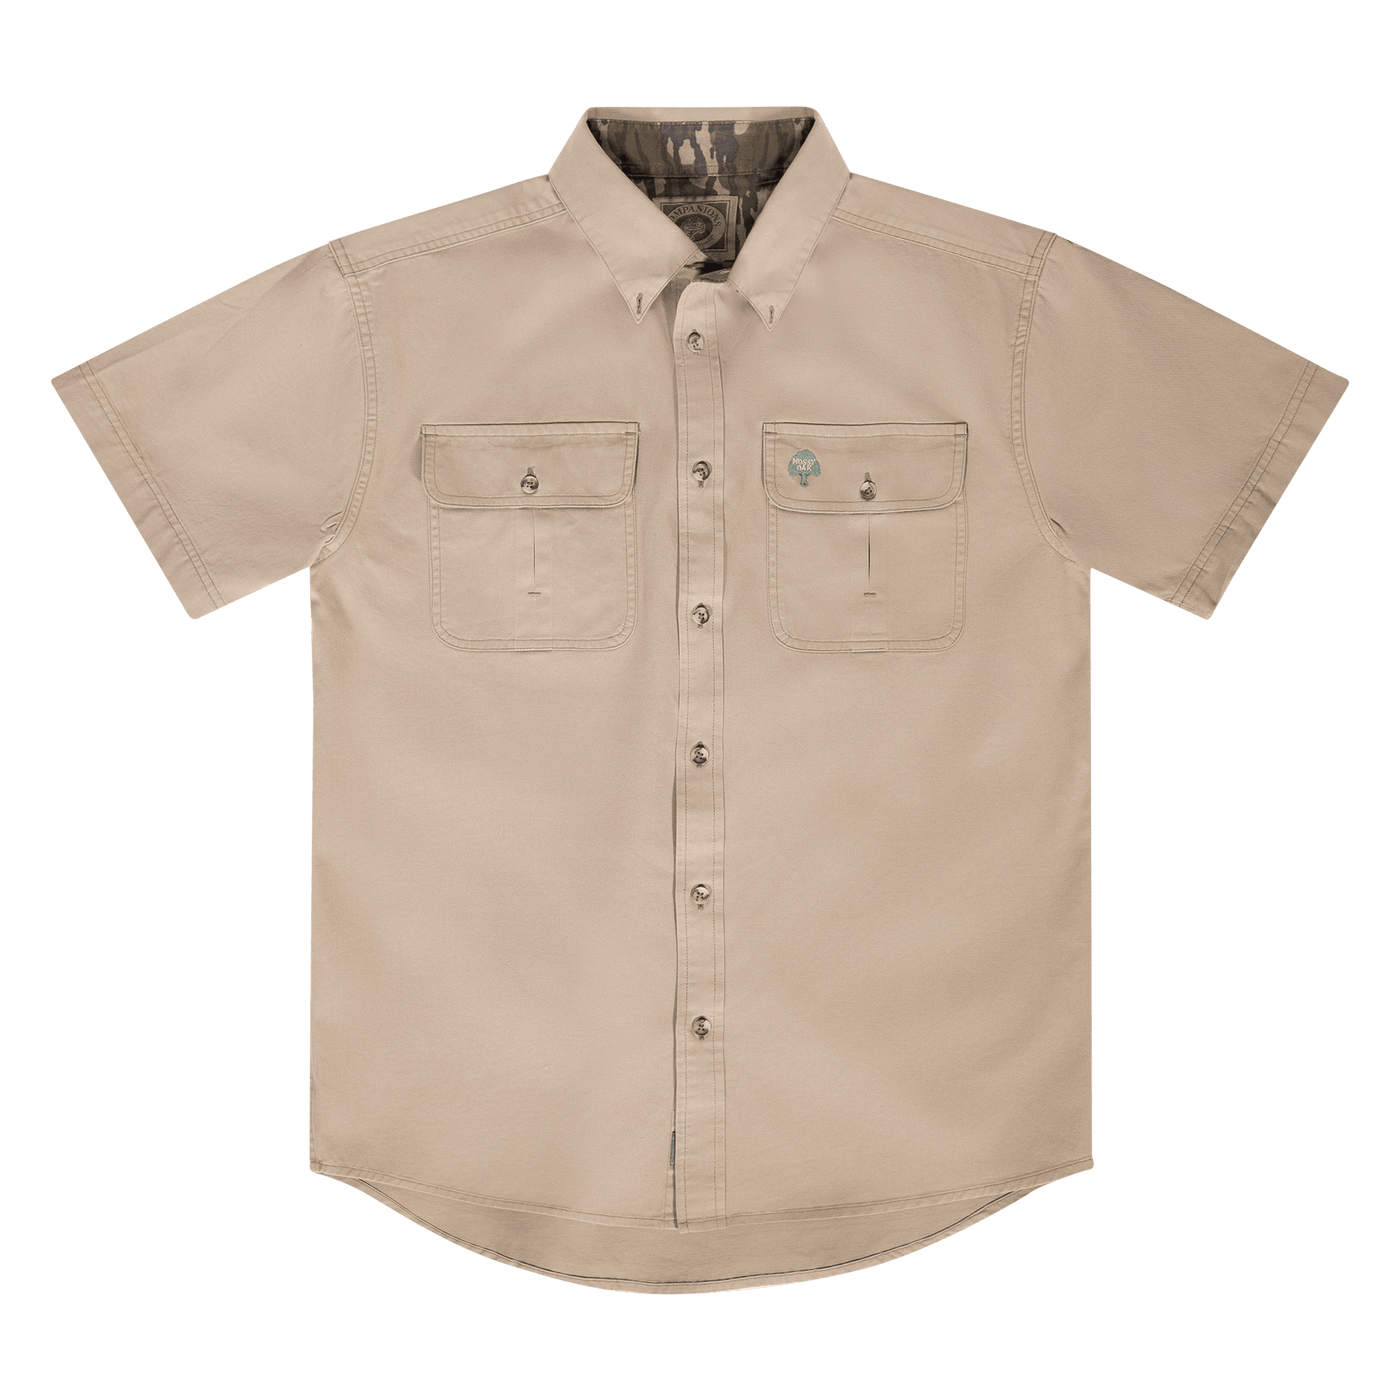 Mossy Oak's Short Sleeve Dirt Shirt in Tan 